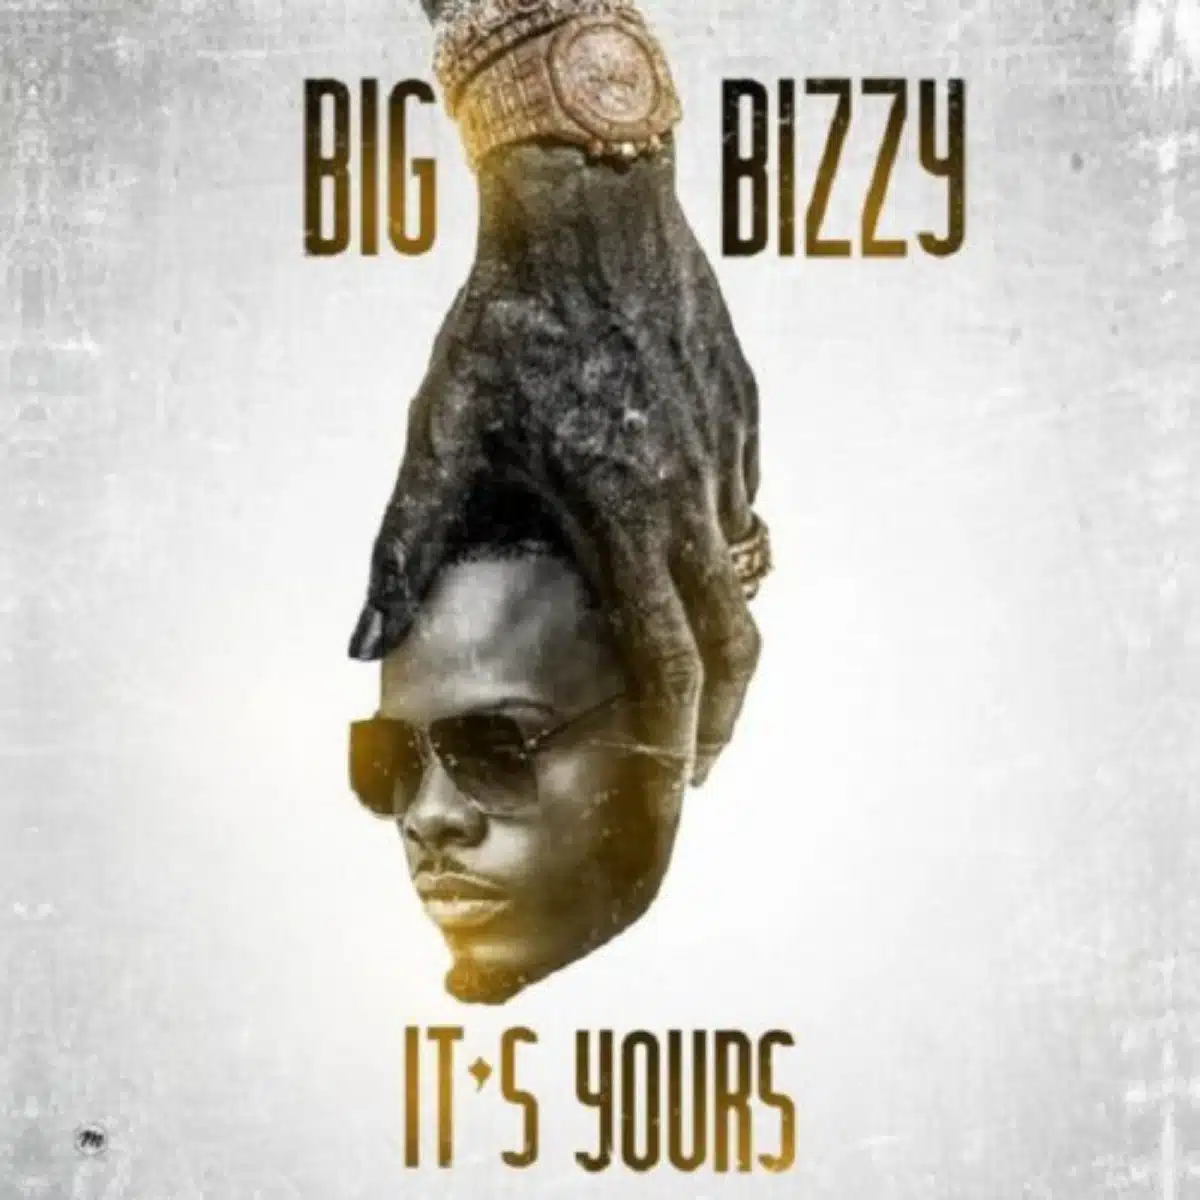 DOWNLOAD: Big Bizzy Ft. Blake – “Promise” Mp3